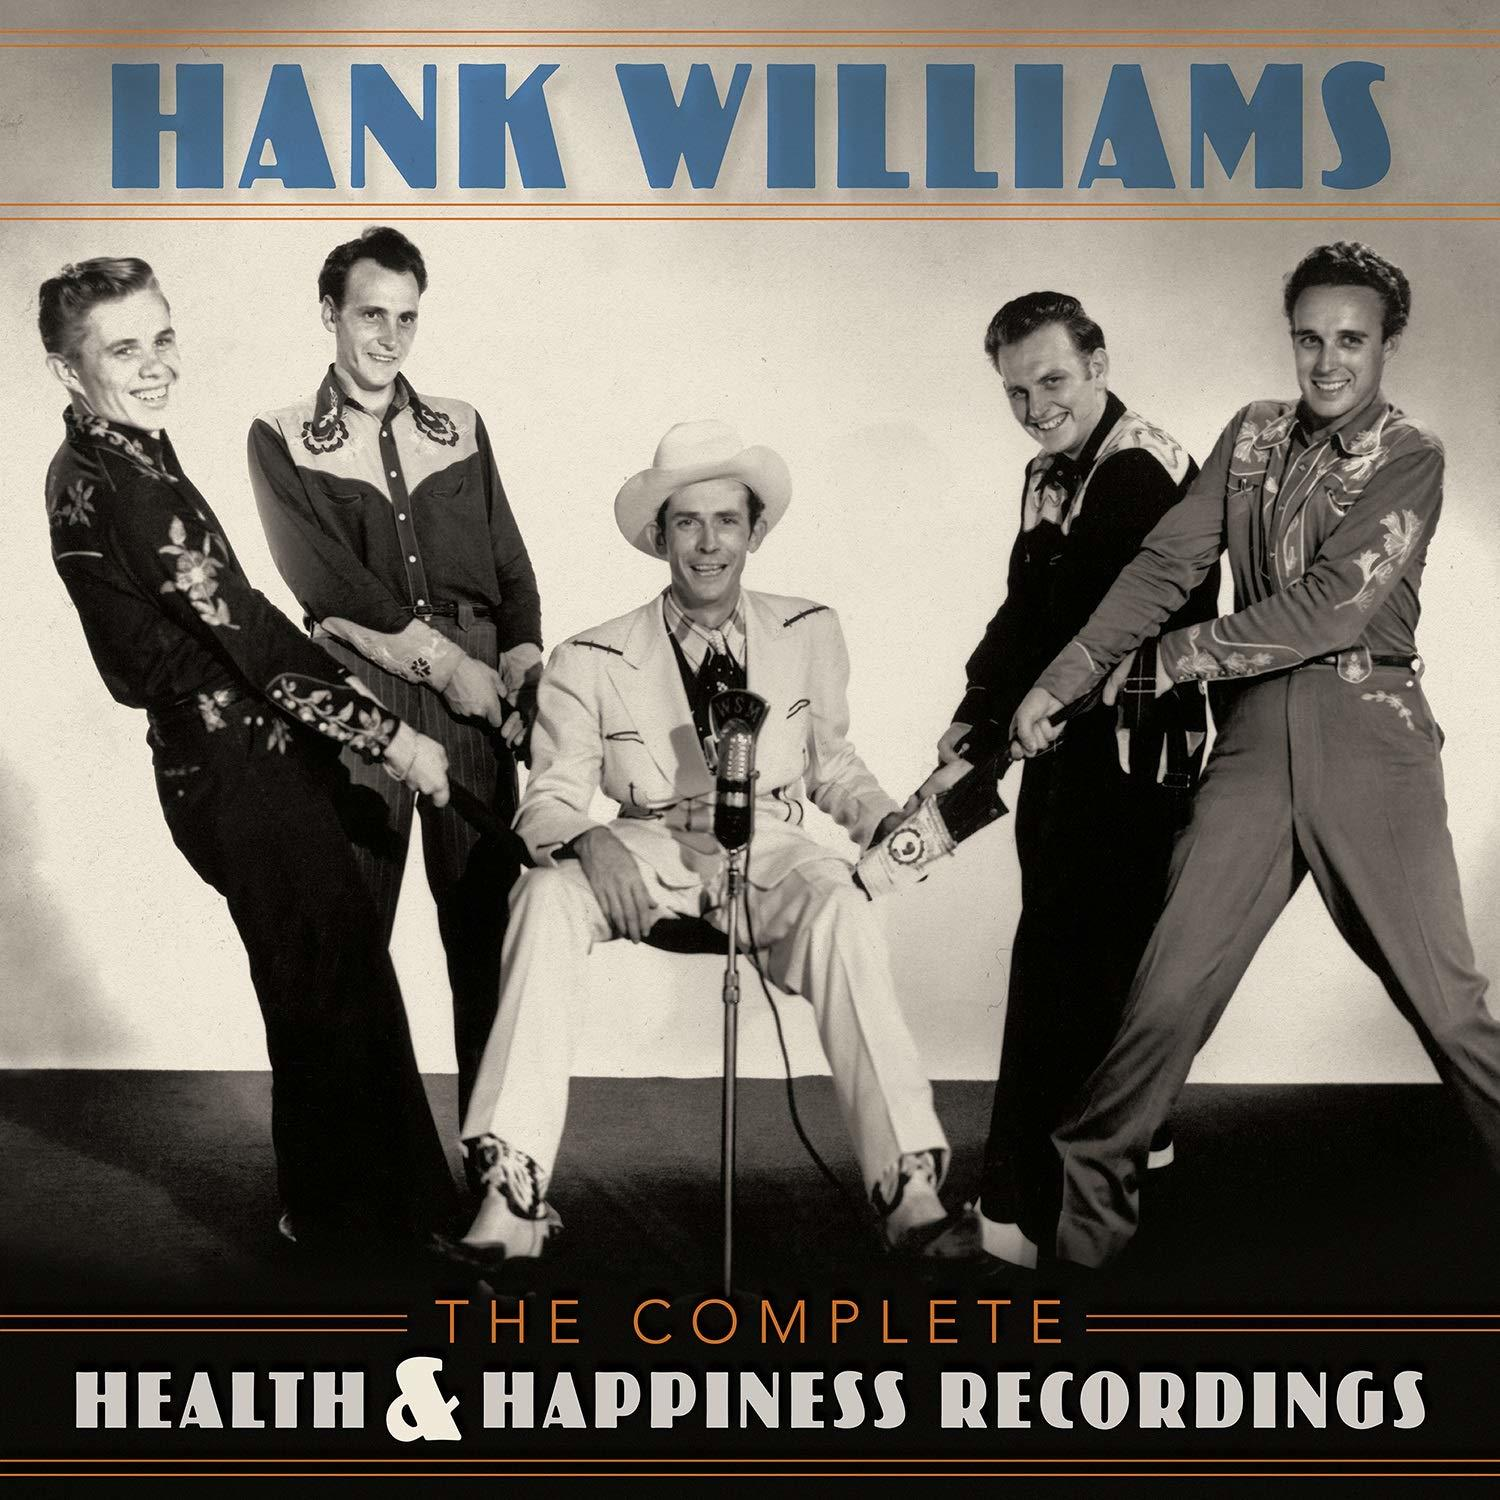 - Recordings (Vinyl) Hank Health Williams The Happiness & - Complete